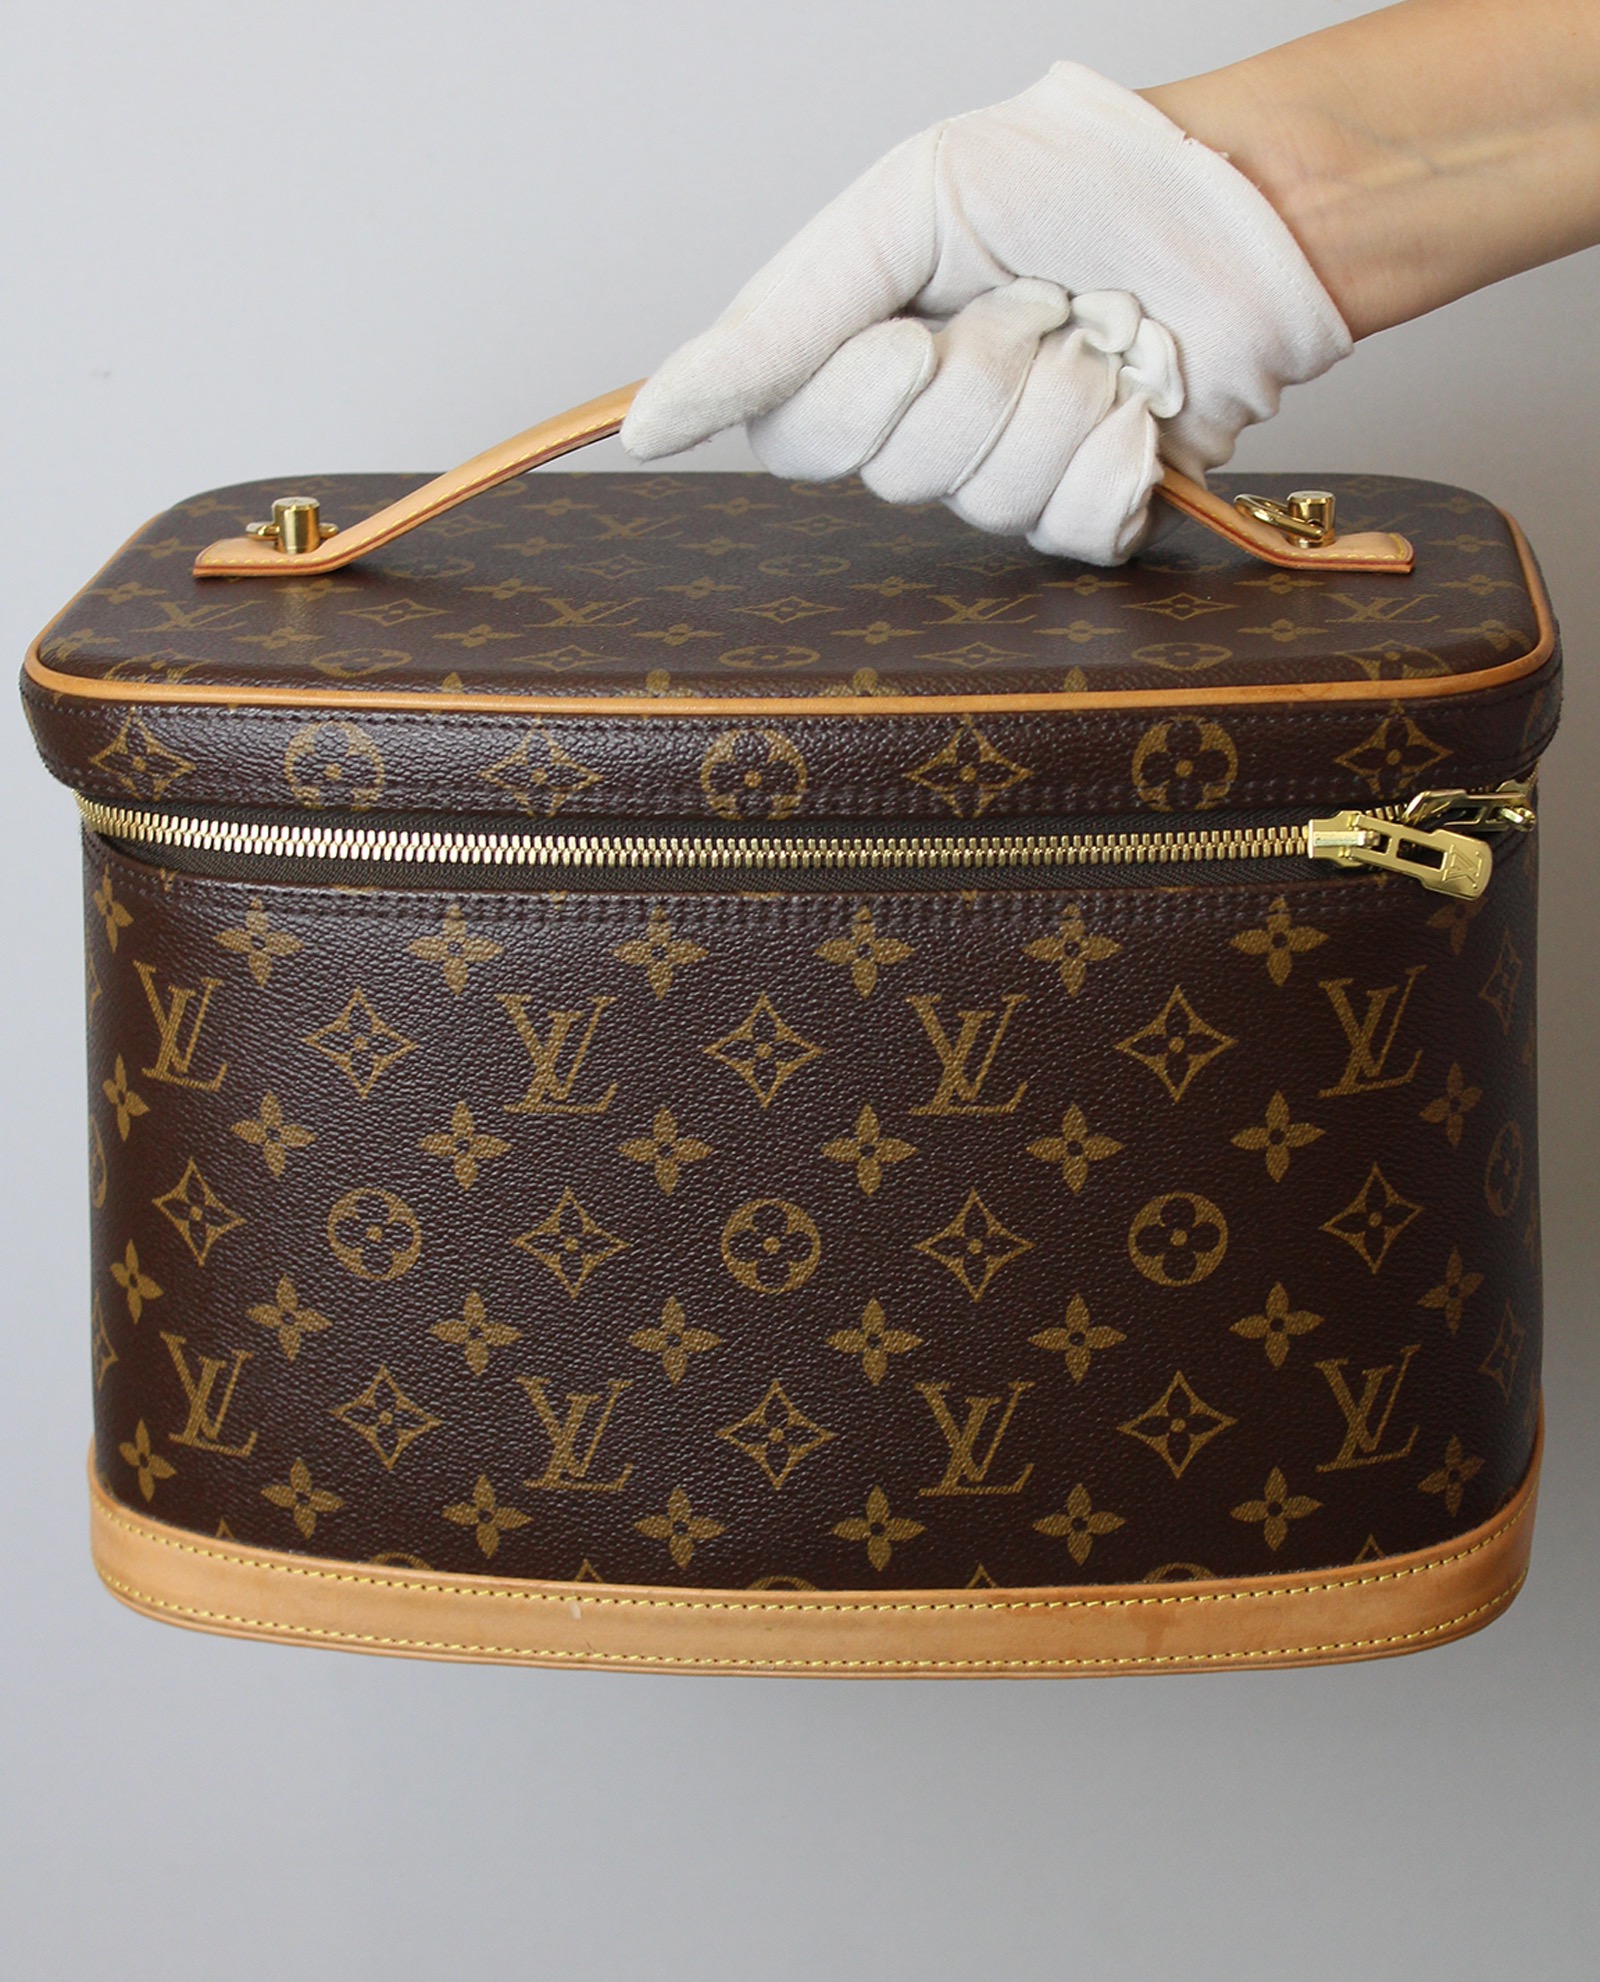 Sold at Auction: Neceser Louis Vuitton.